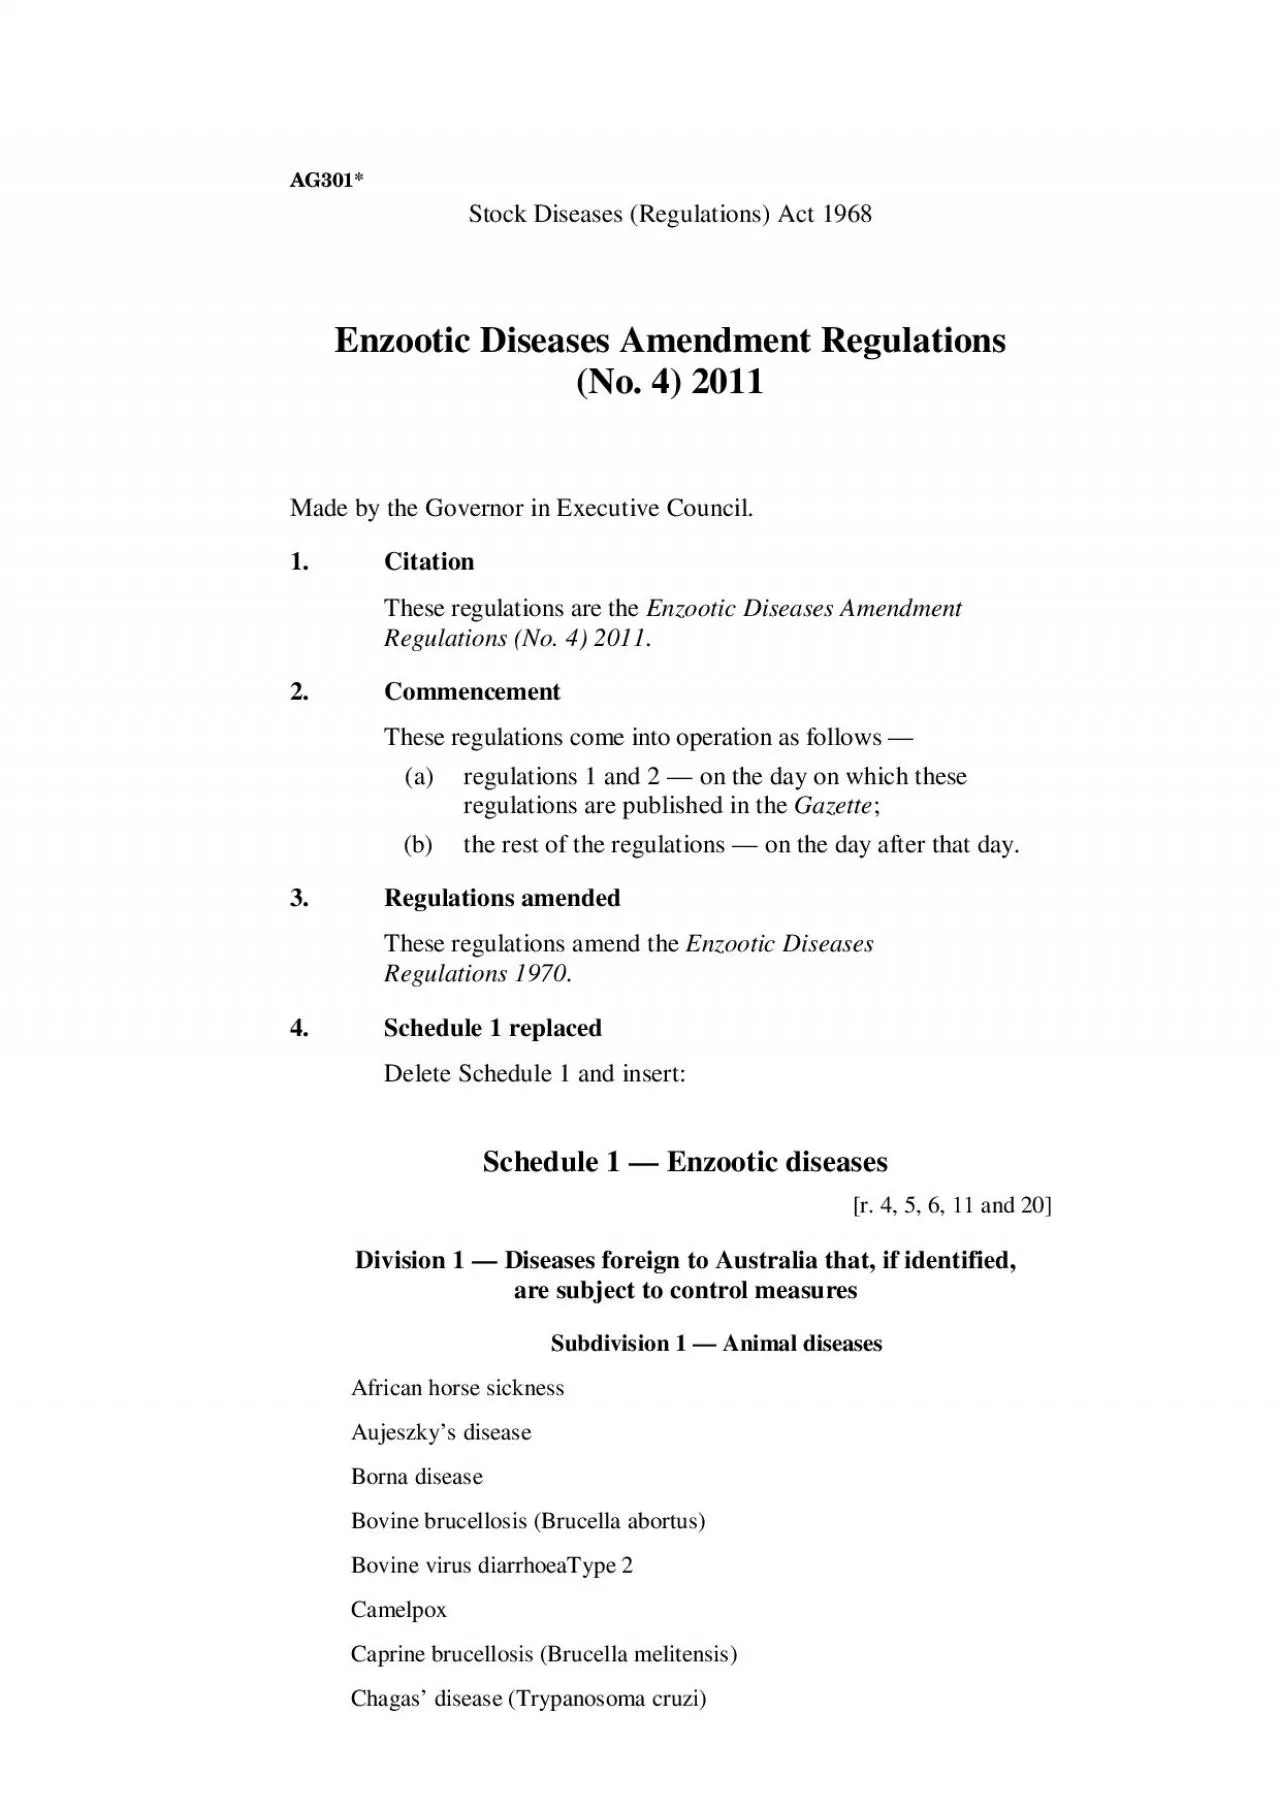 AG301 Stock Diseases Regulations Act 1968 Enzootic Diseases Amendme